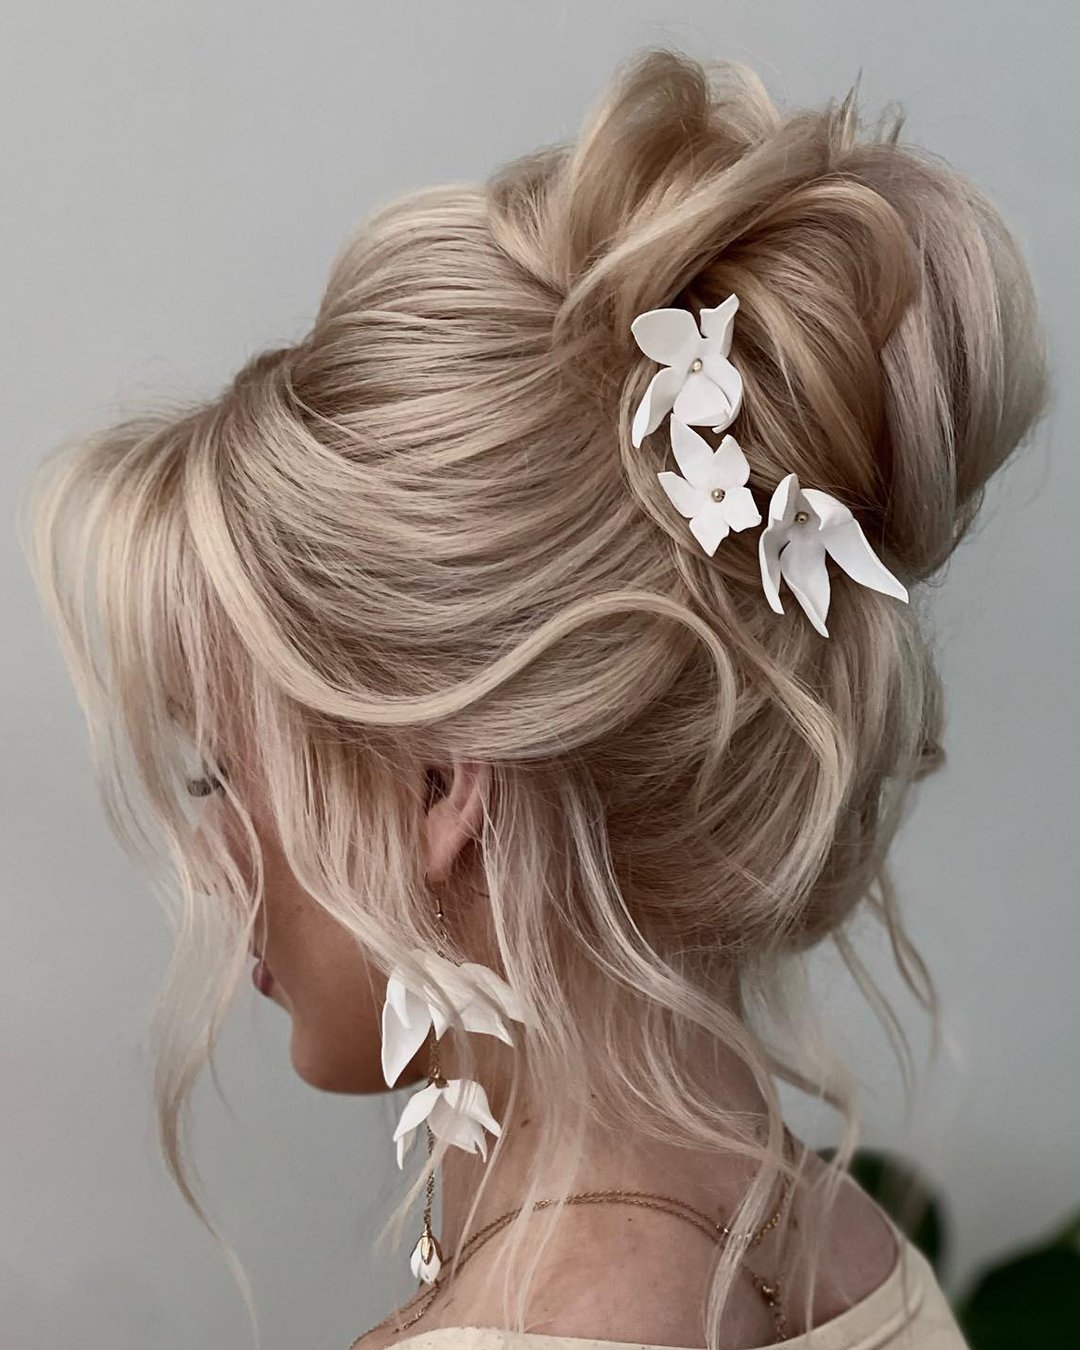 wedding guest hairstyles high textured bun with flowers barbara.szuksztul.lenarczyk